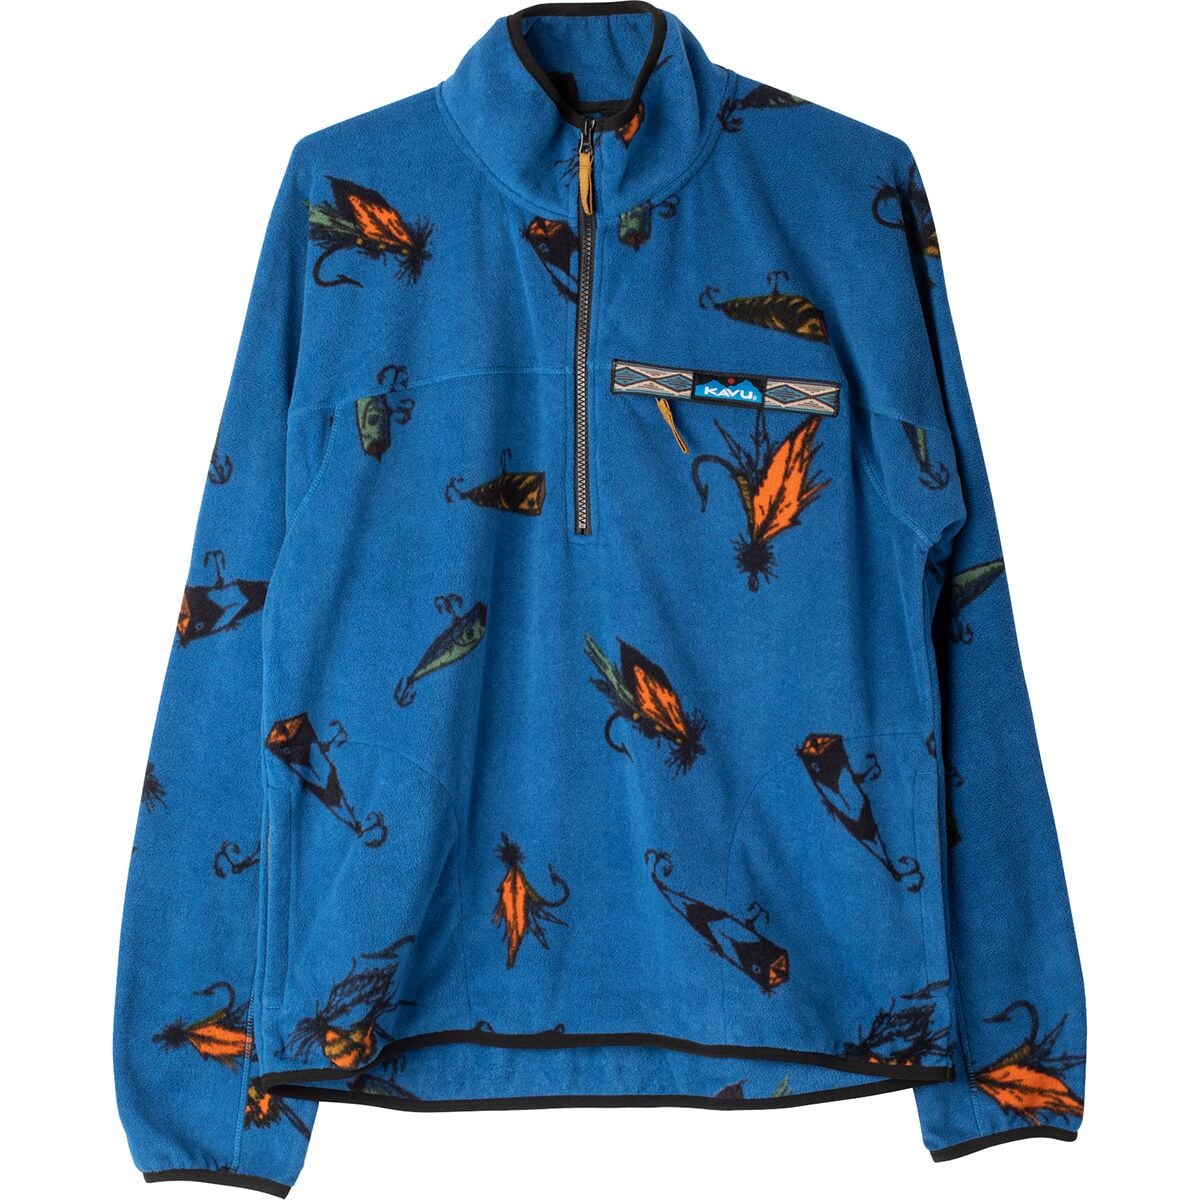 KAVU Winter Throwshirt Fleece Jacket - Men's